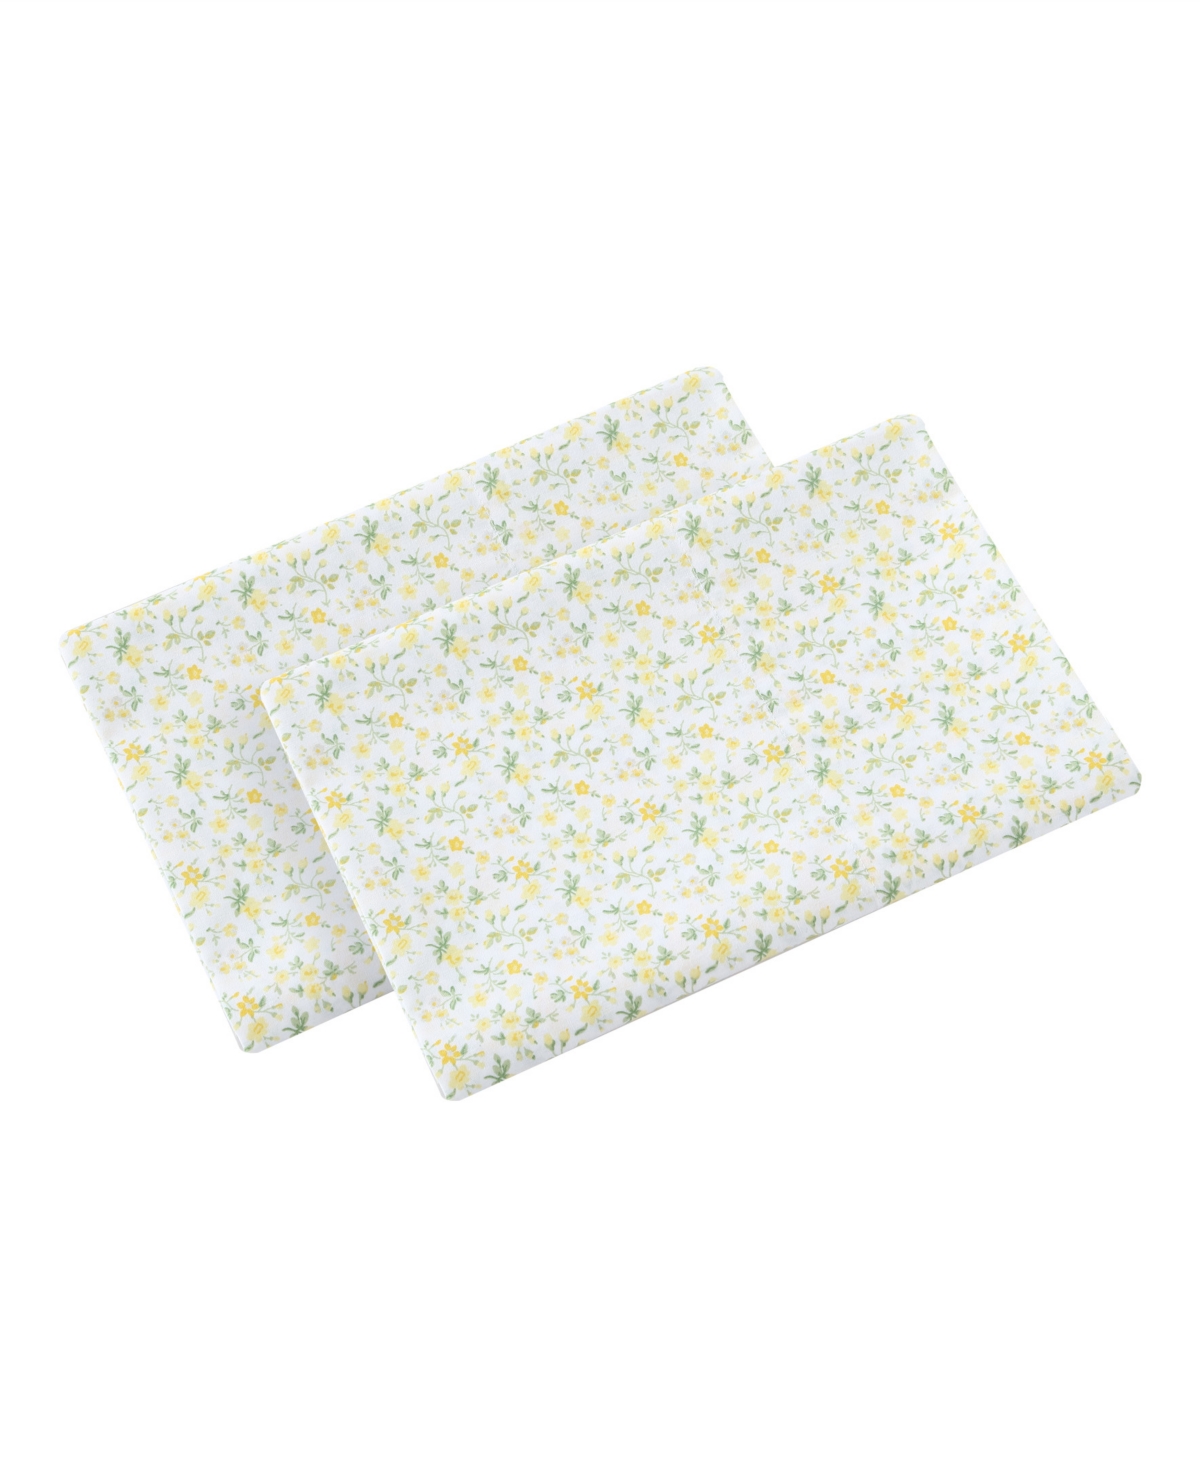 Laura Ashley Cotton Percale Pillowcase Pair, Standard In Evie